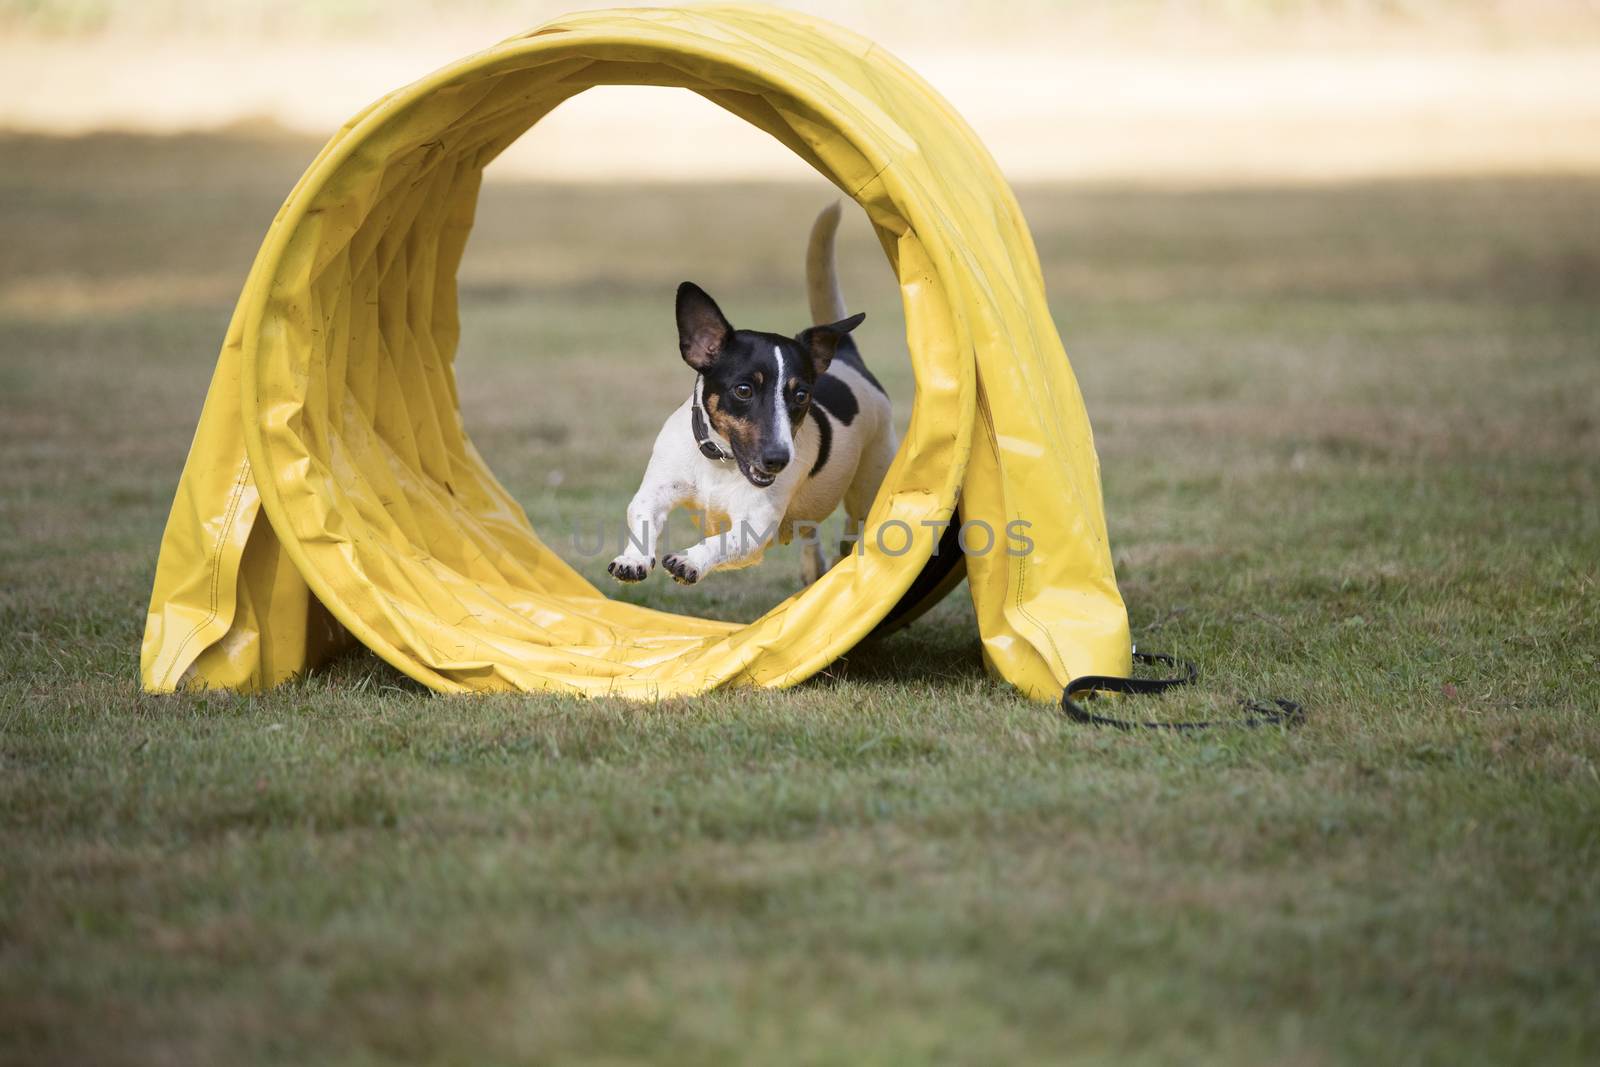 Dog, Jack Russel Terrier, running through agility tunnel by avanheertum